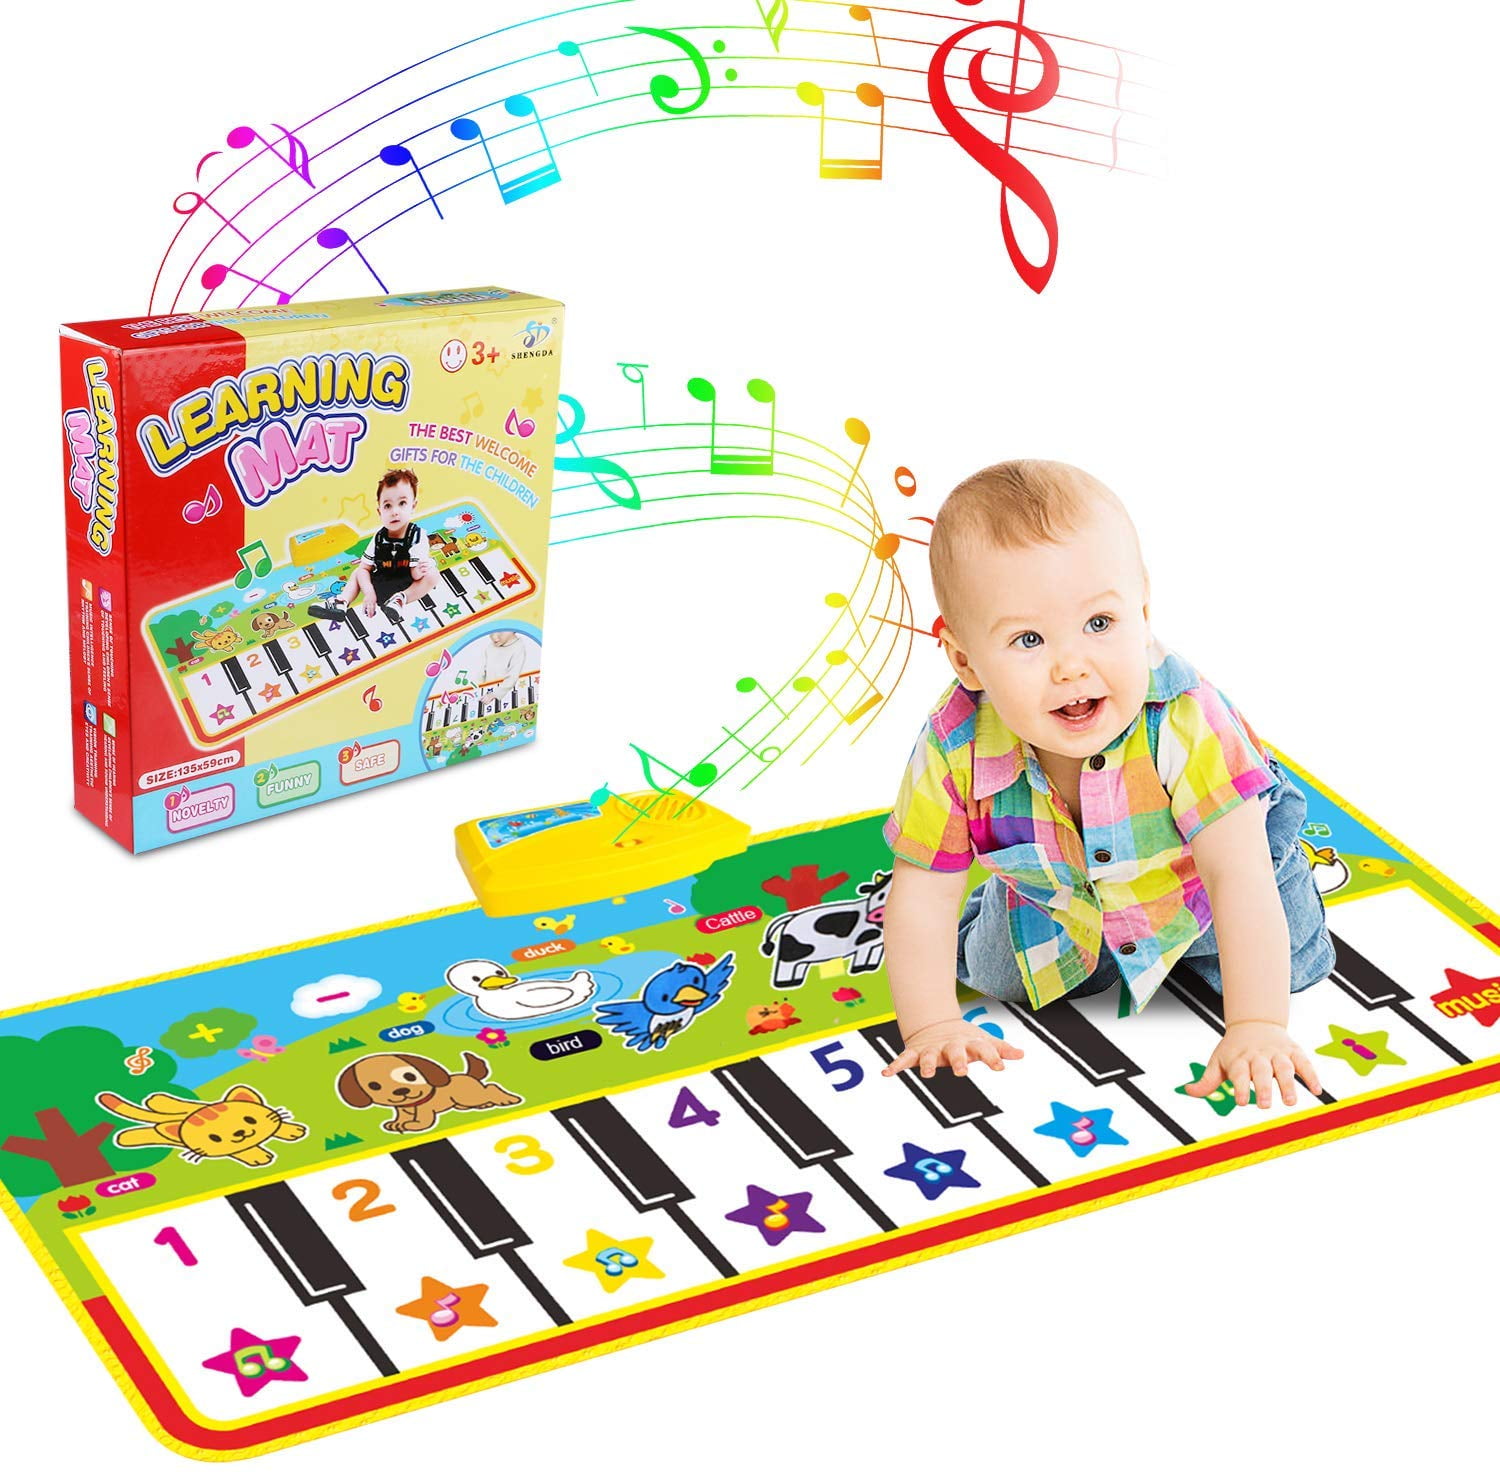 Kids Toy Electronic Music Play Mat Dance Sound Mix Drum Kit Keyboard Piano Gifts 